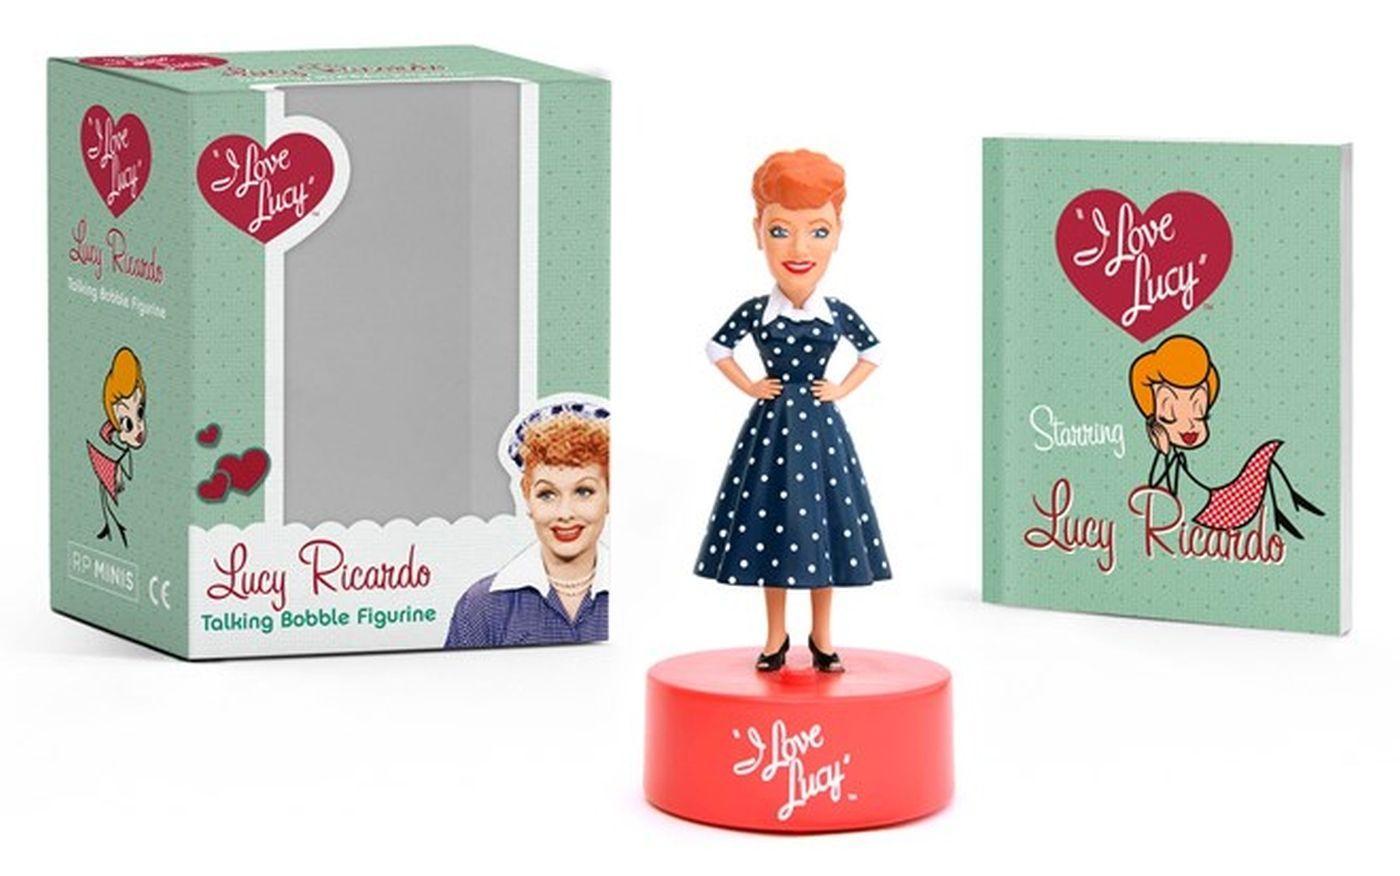  Lucy: Lucy Ricardo Talking Bobble Figurine